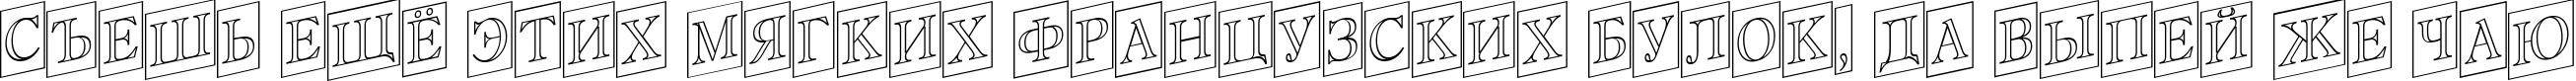 Пример написания шрифтом a_AntiqueTitulTrCmUpOtl текста на русском